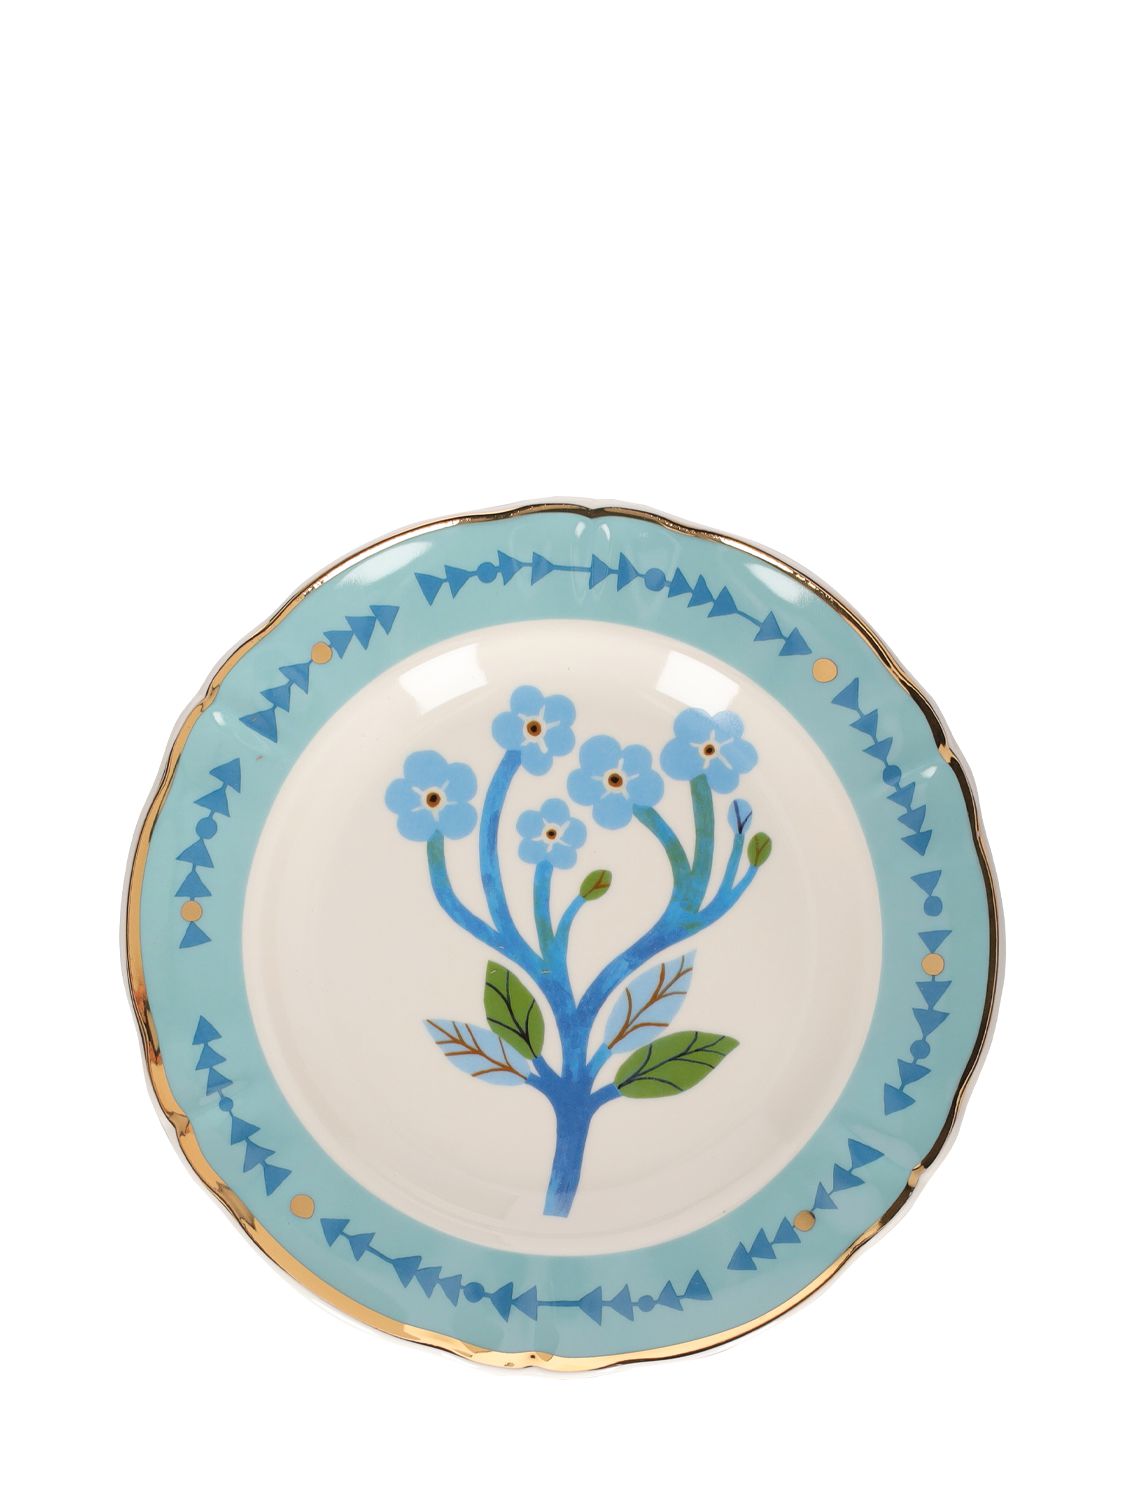 Image of Botanica Dessert Plate